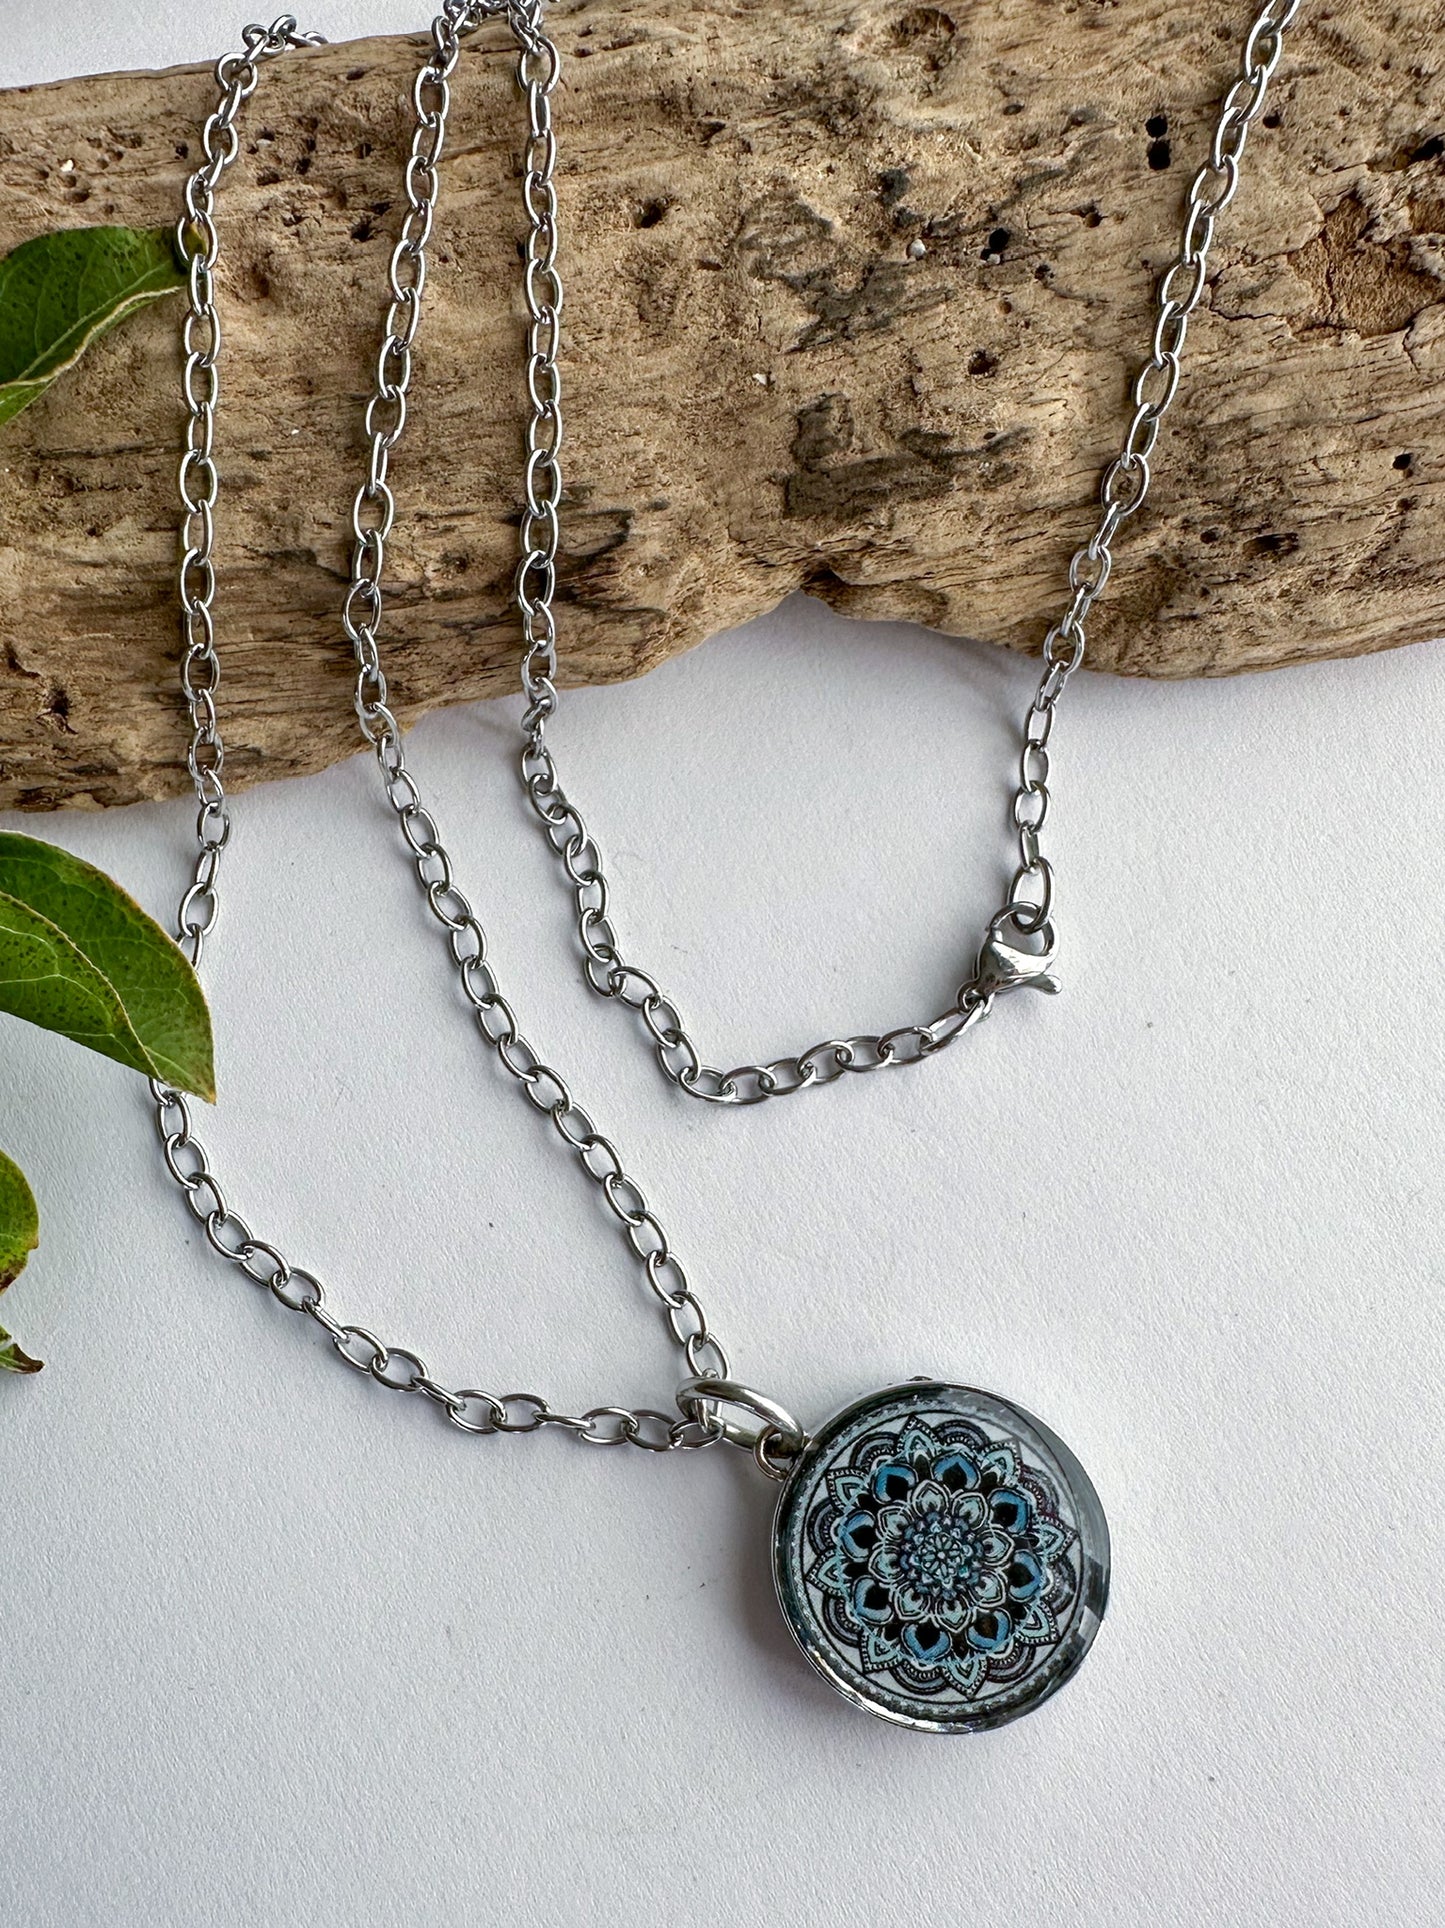 Believe in Yourself Mandala Pendant Necklace - SpiritedBoutiques Boho Hippie Boutique Style Necklace, Spirit Lala